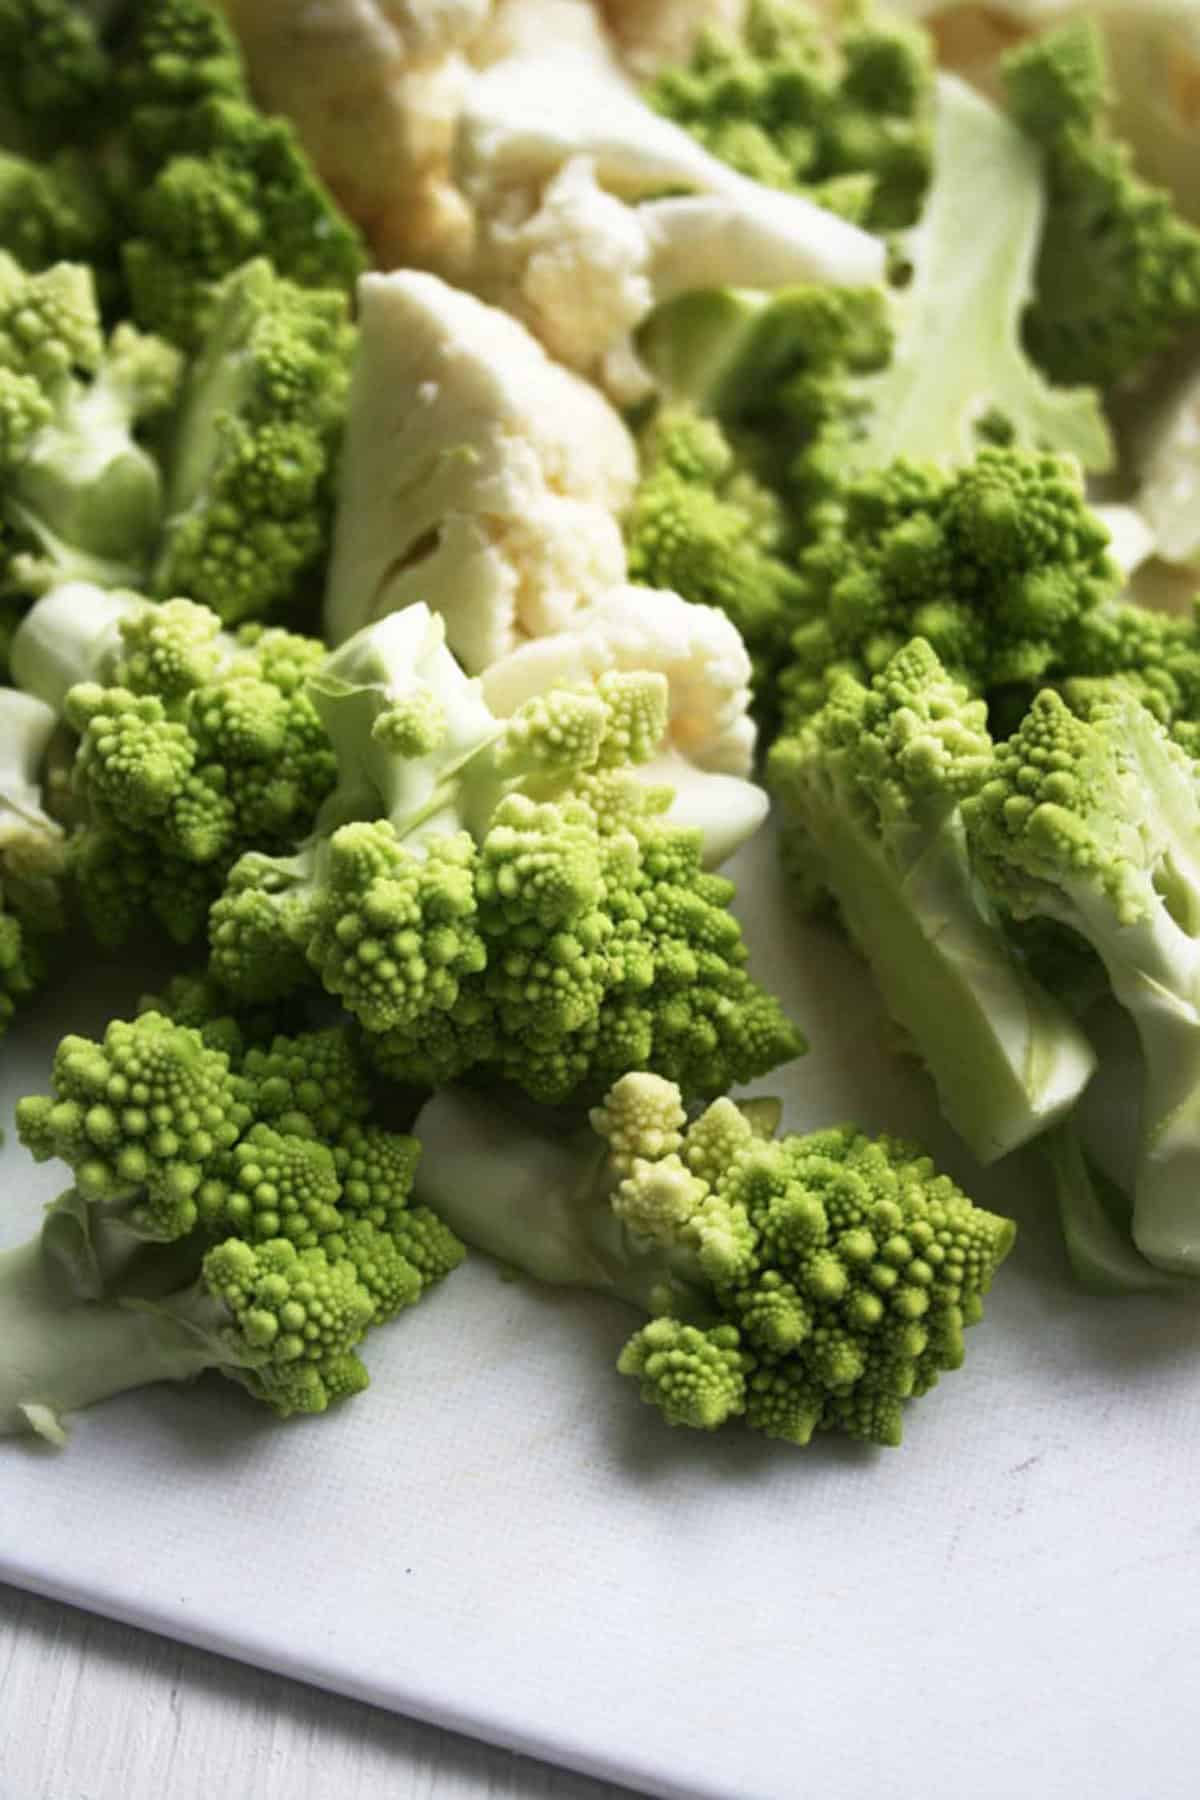 Roasted Cauliflower Farro Salad - A healthy vegan autumnal salad recipe made with delicious spiced roasted cauliflower and chewy farro | eatloveeats.com